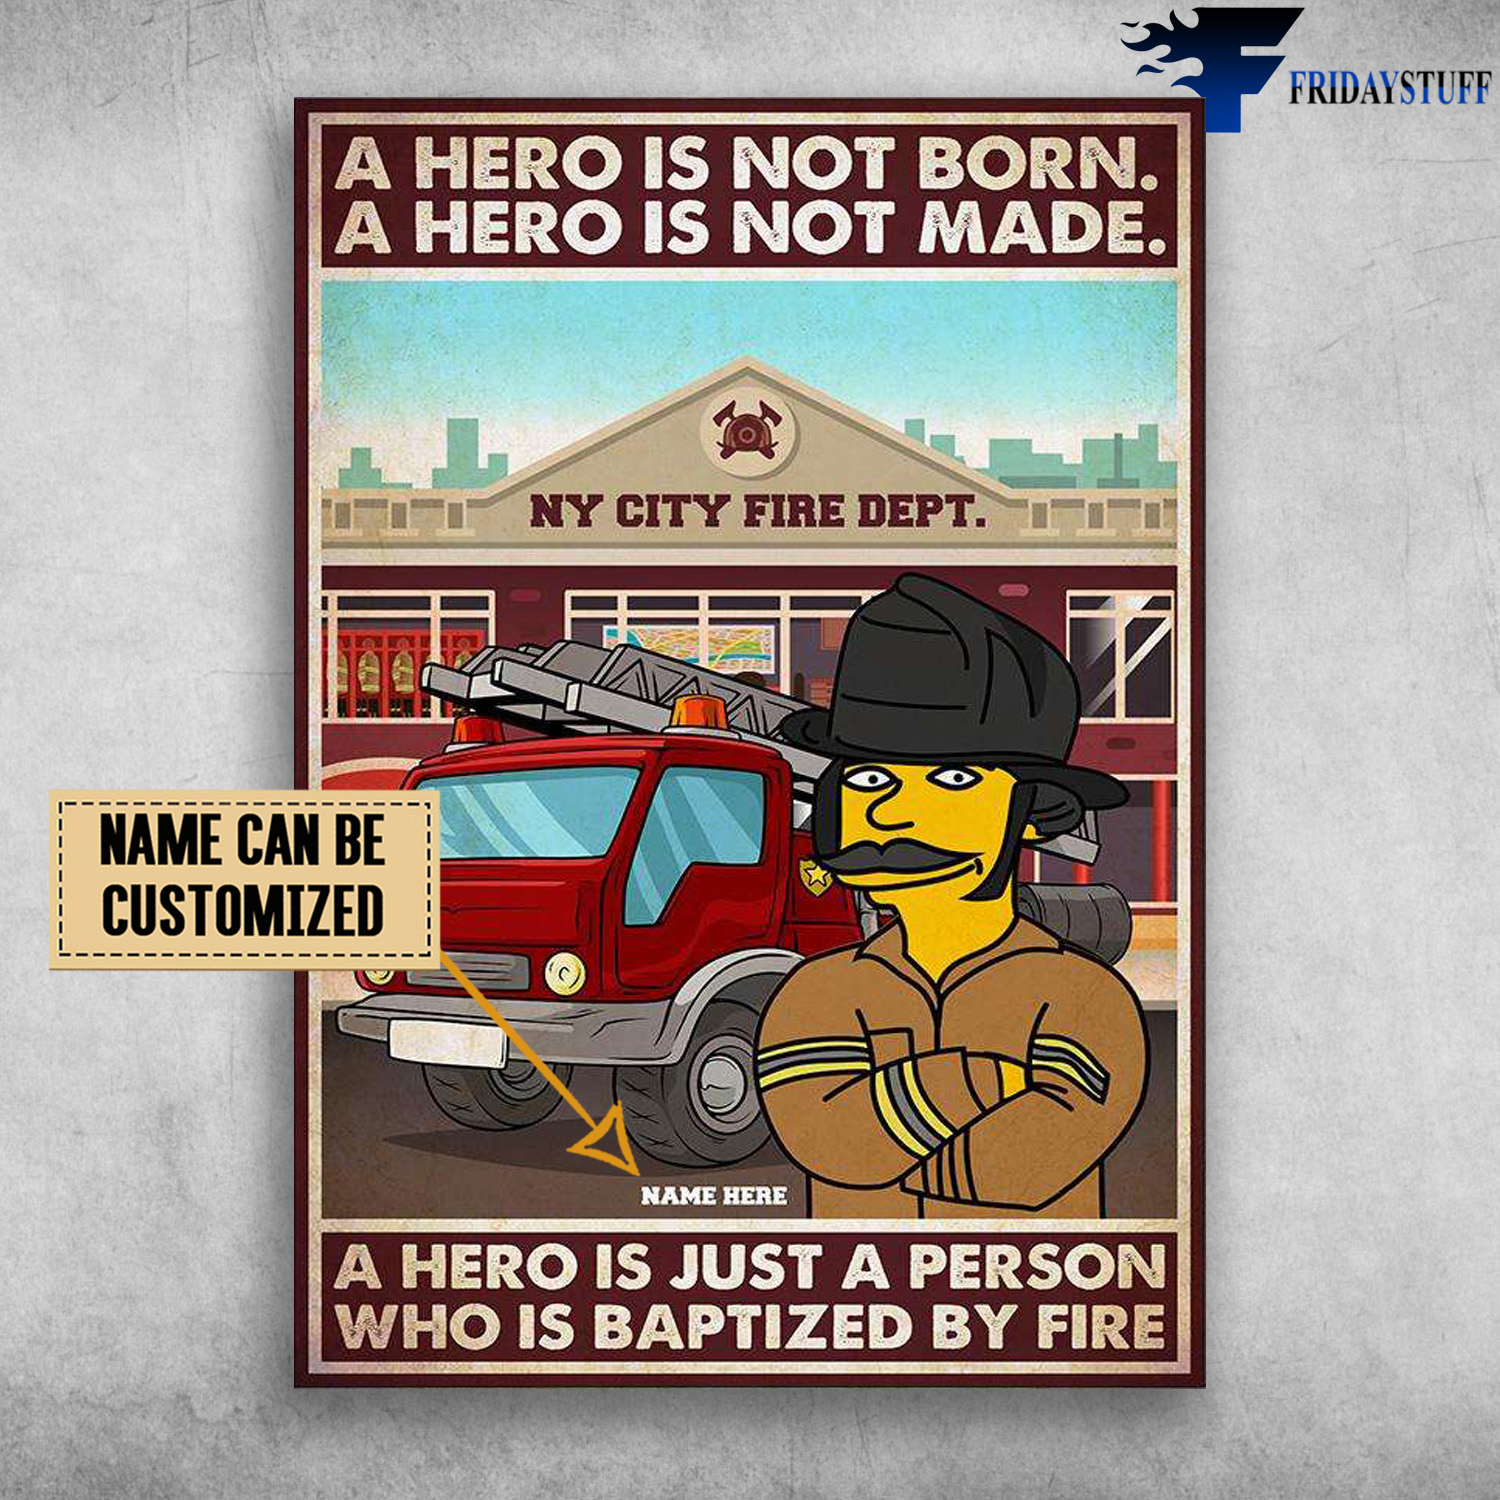 Firefighter Man, Fire Truck, A Hero Is Not Born, A Hero Is Not Made, A Hero Is Just A Person, Who Is Baptized By Fire